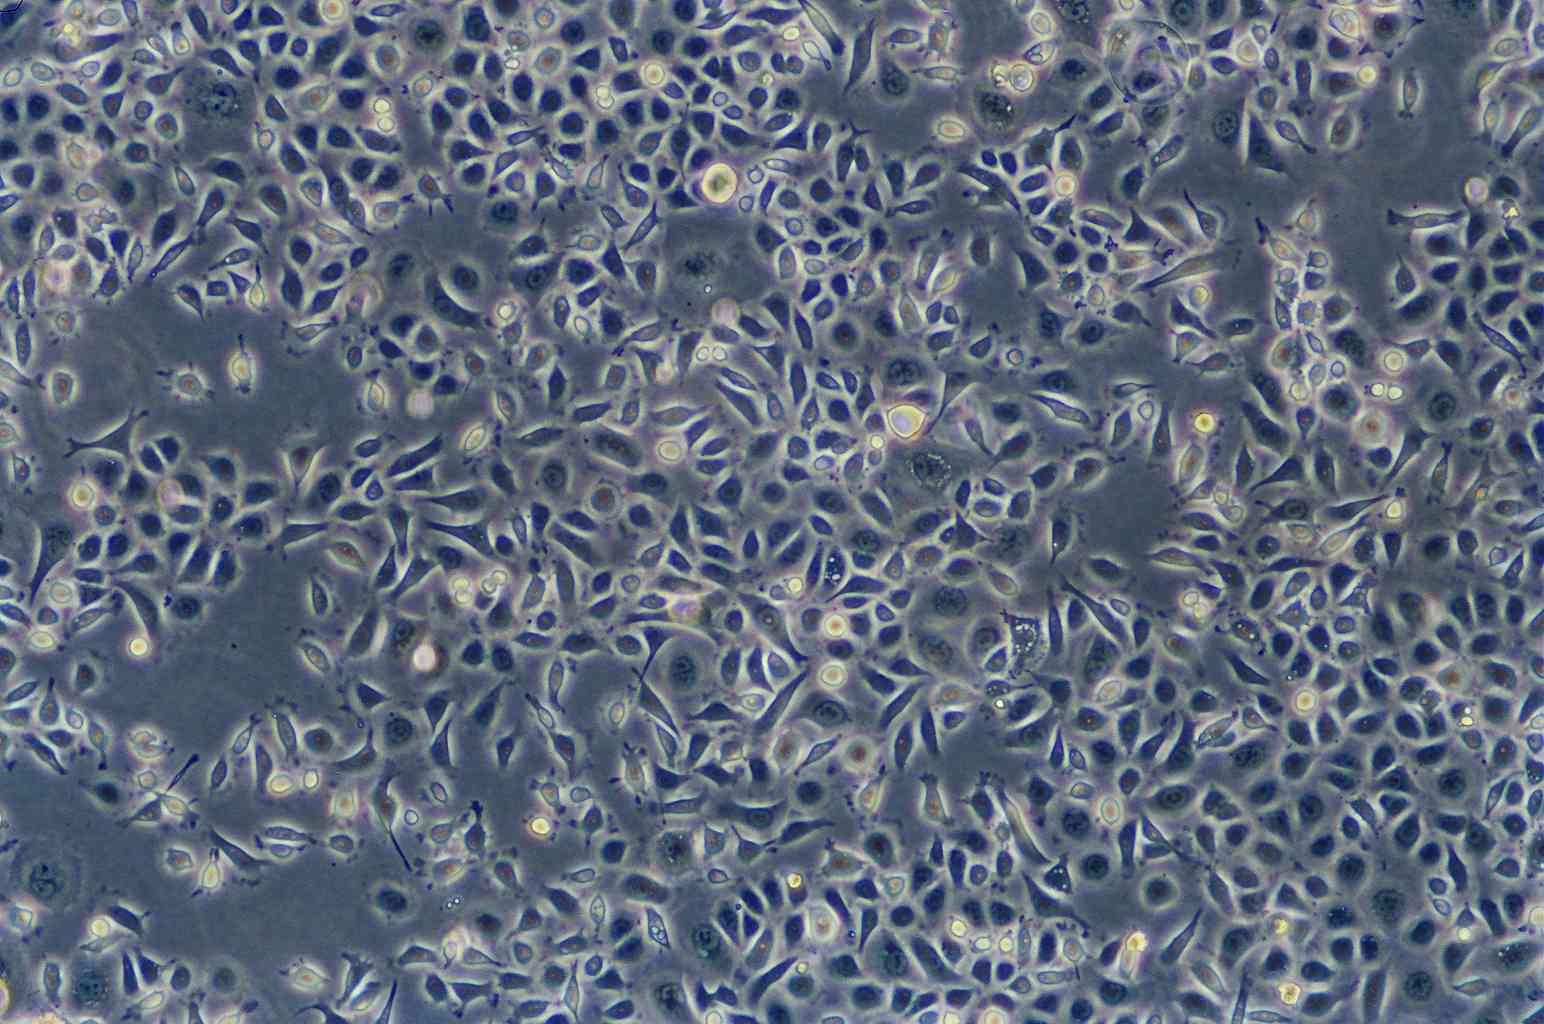 VCaP epithelioid cells人前列腺癌细胞系